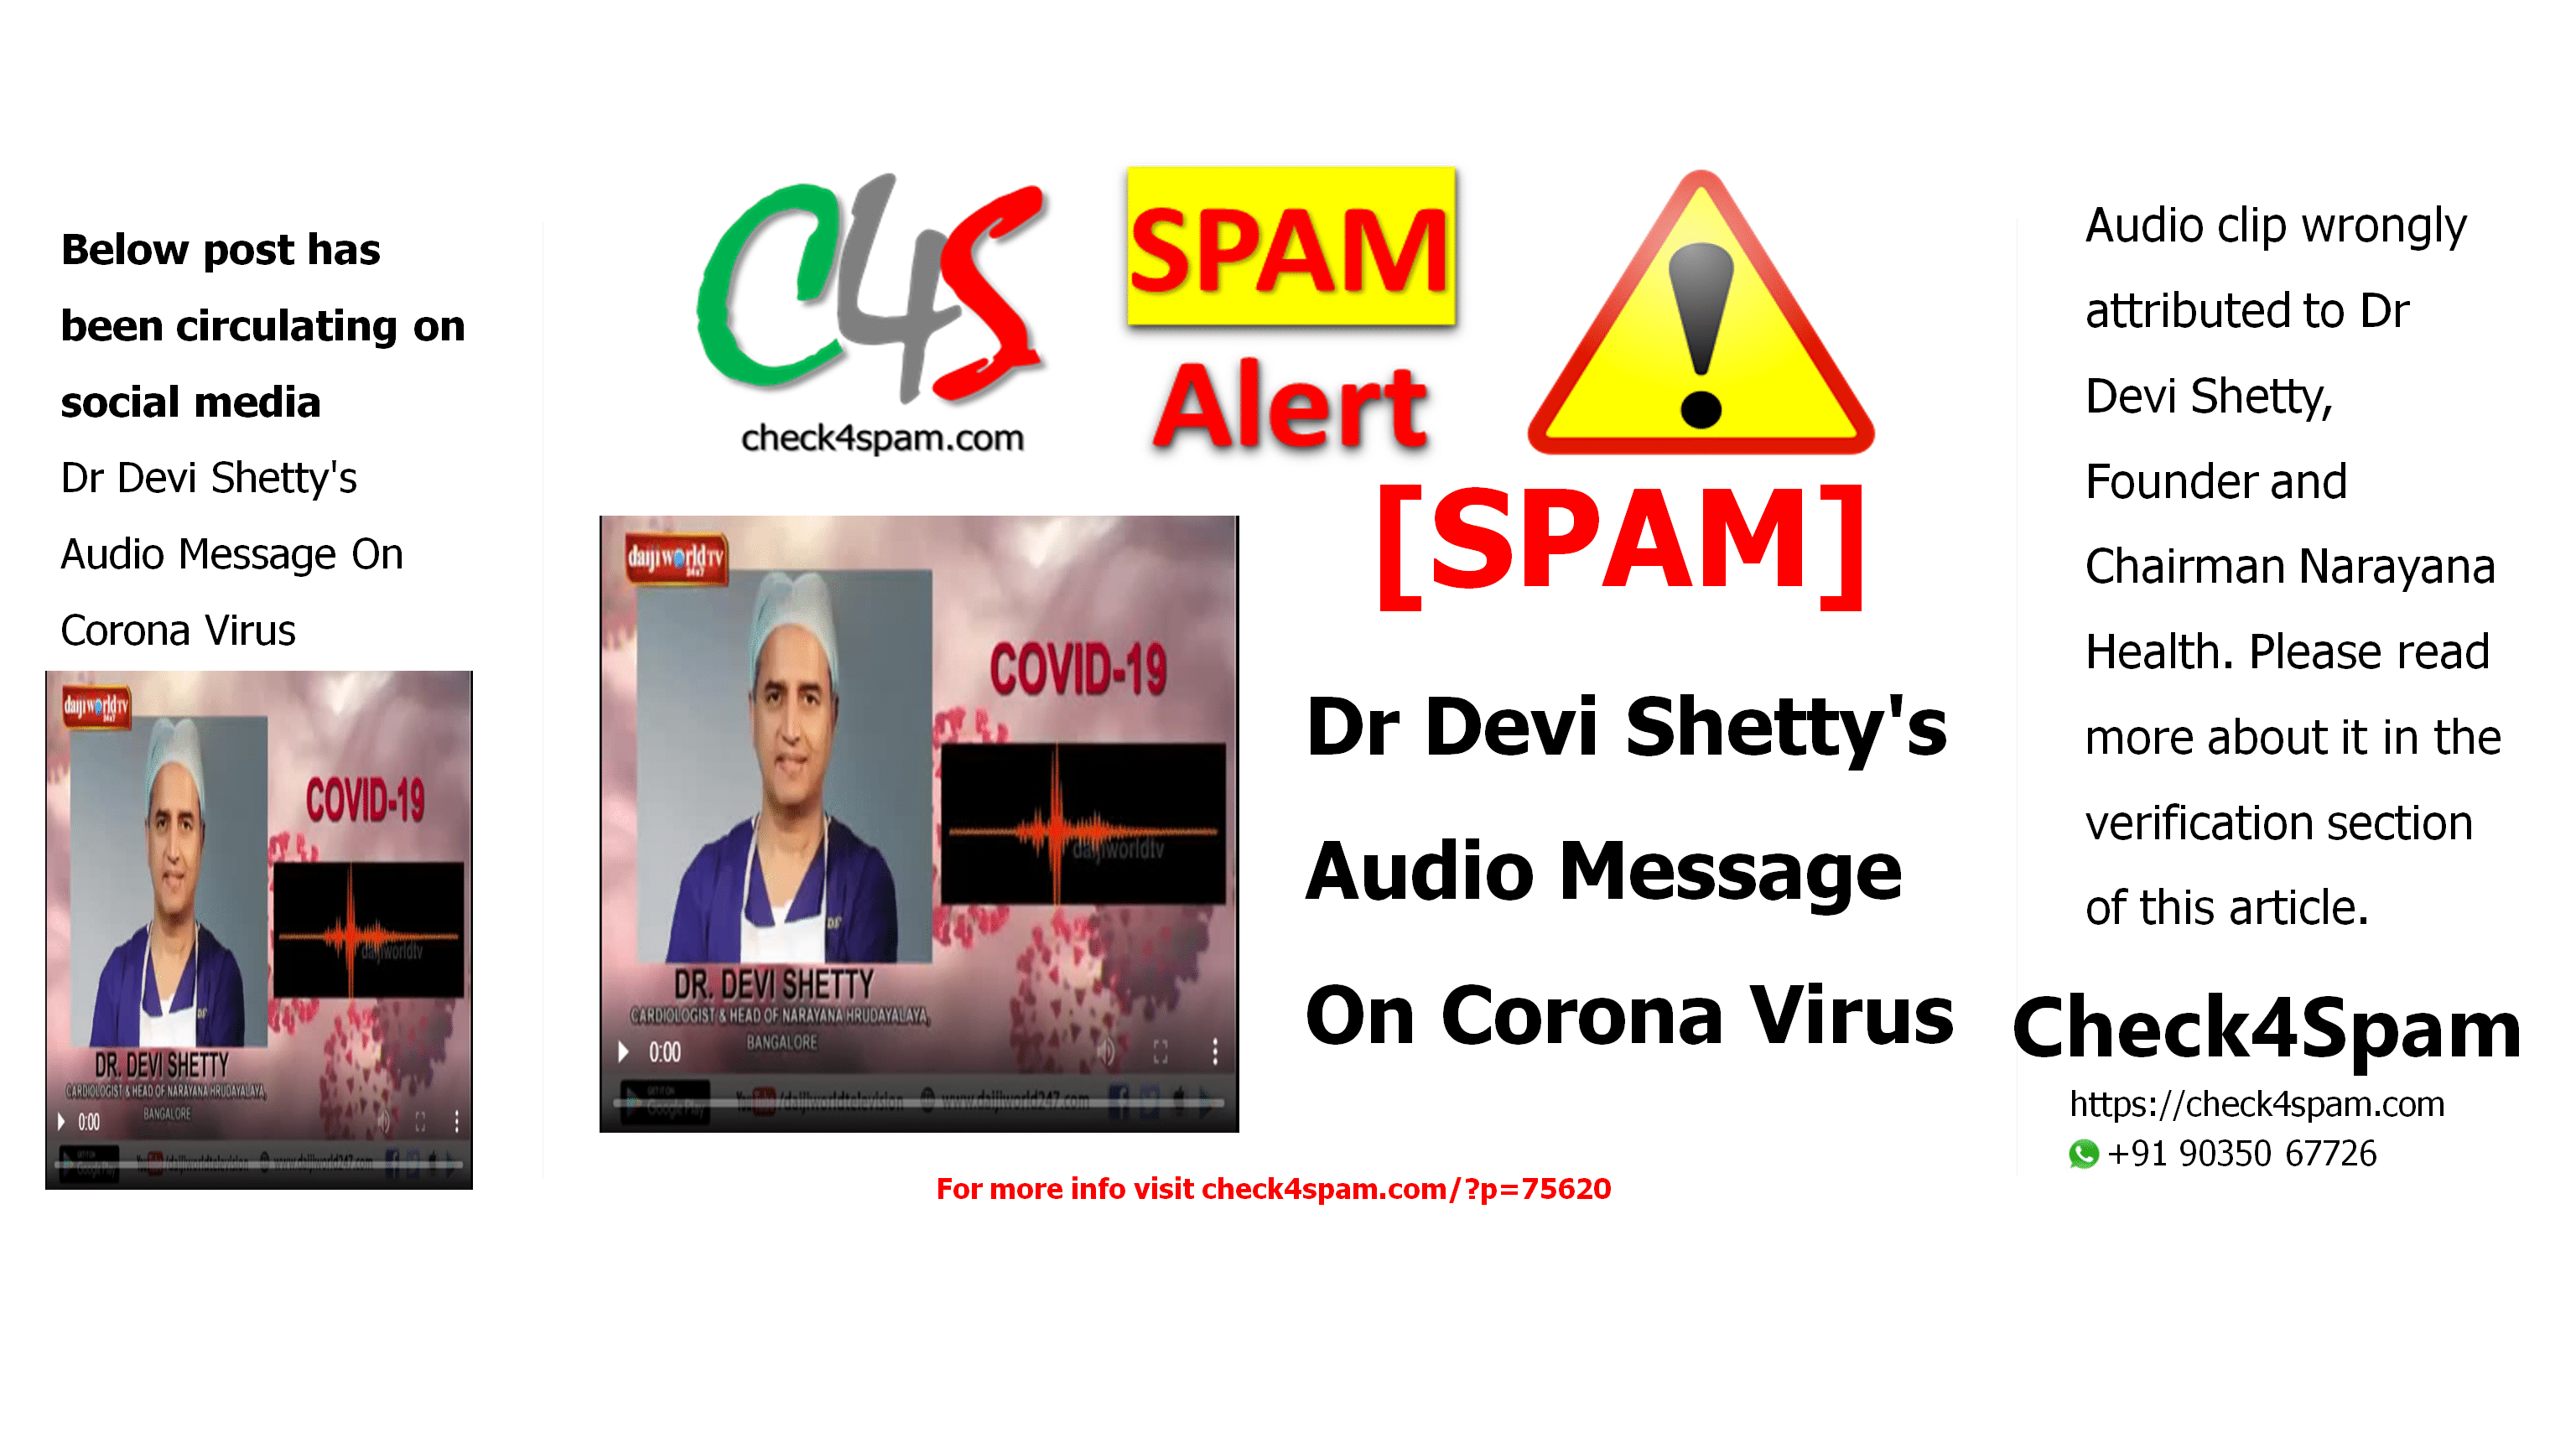 Dr Devi Shetty's Audio Message On CoronaVirus